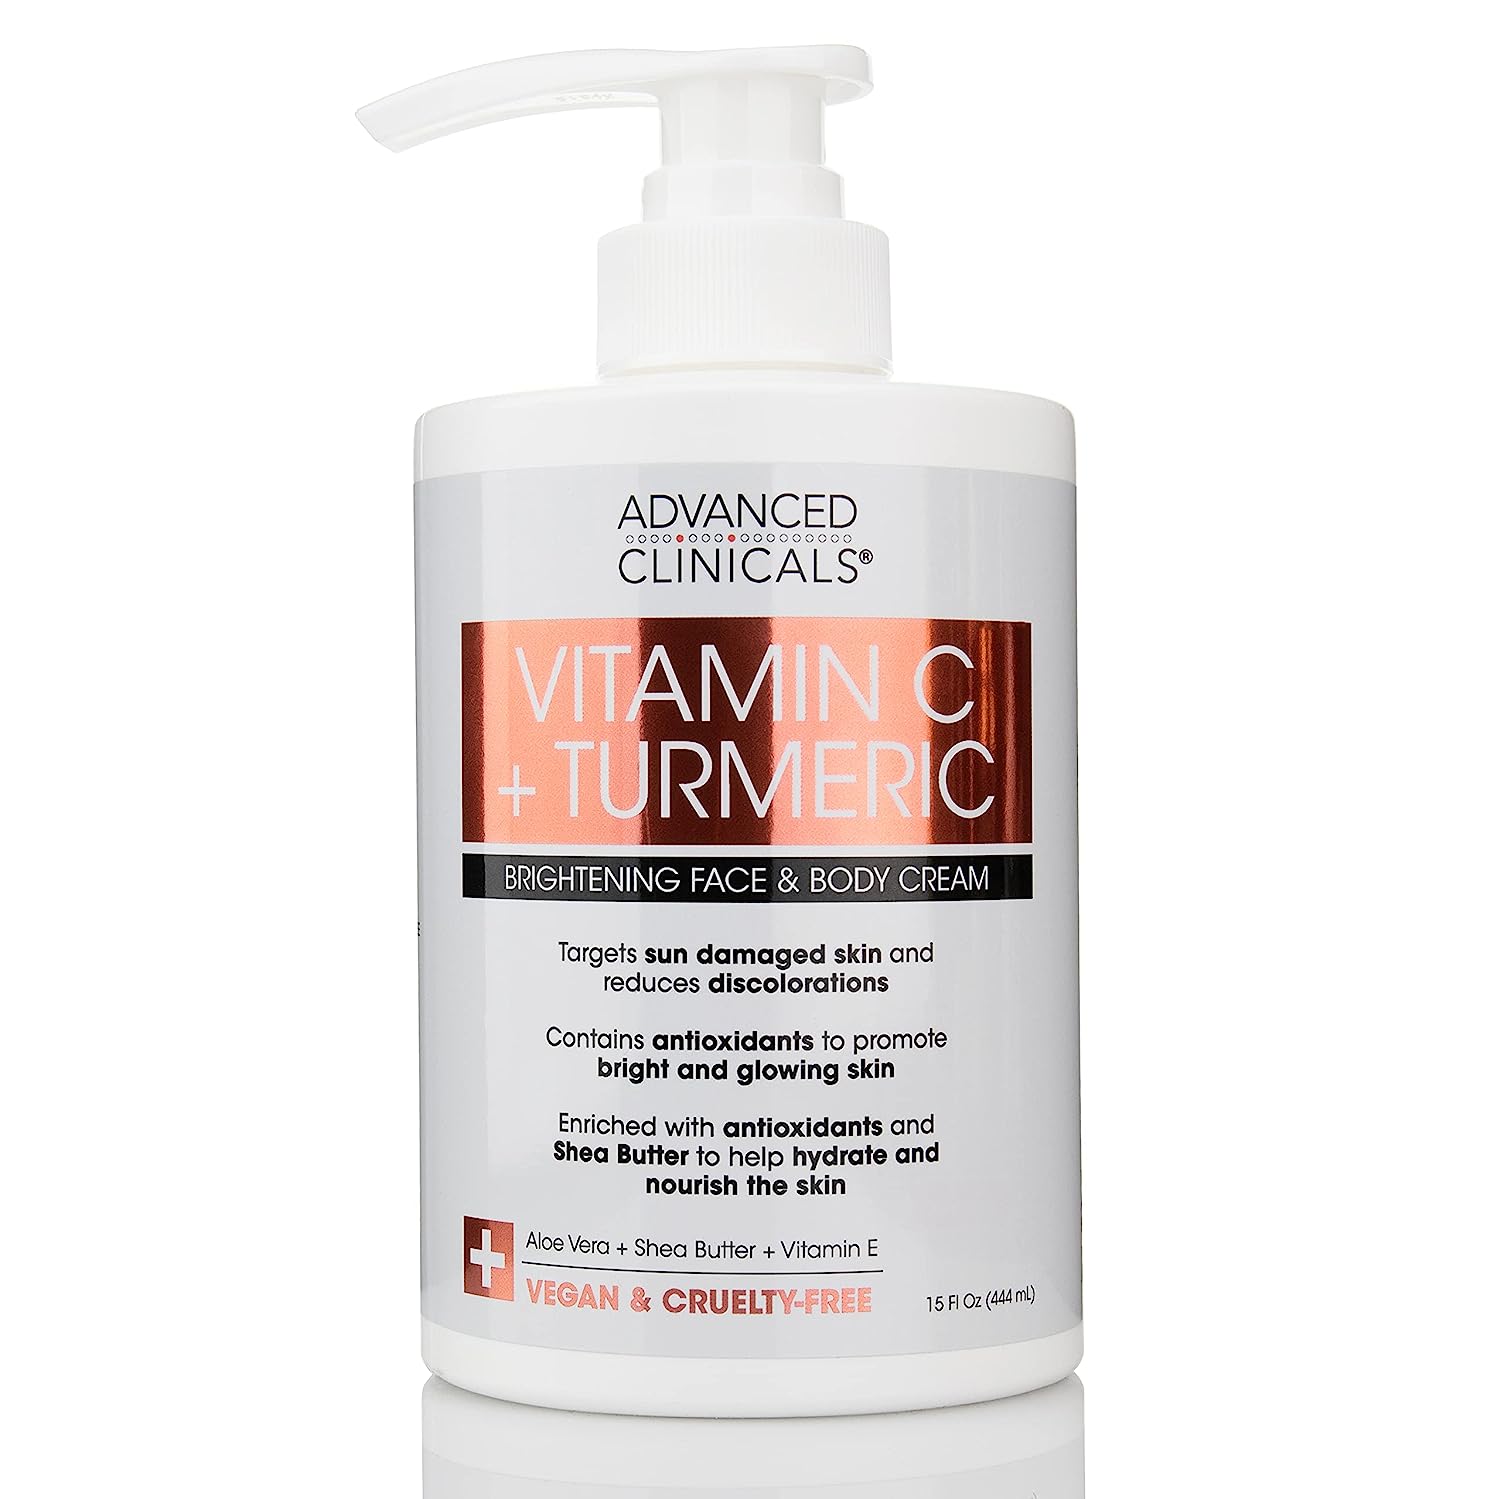 Advanced Clinicals Vitamin C + Turmeric Brightening Face & Body Cream, 444ml